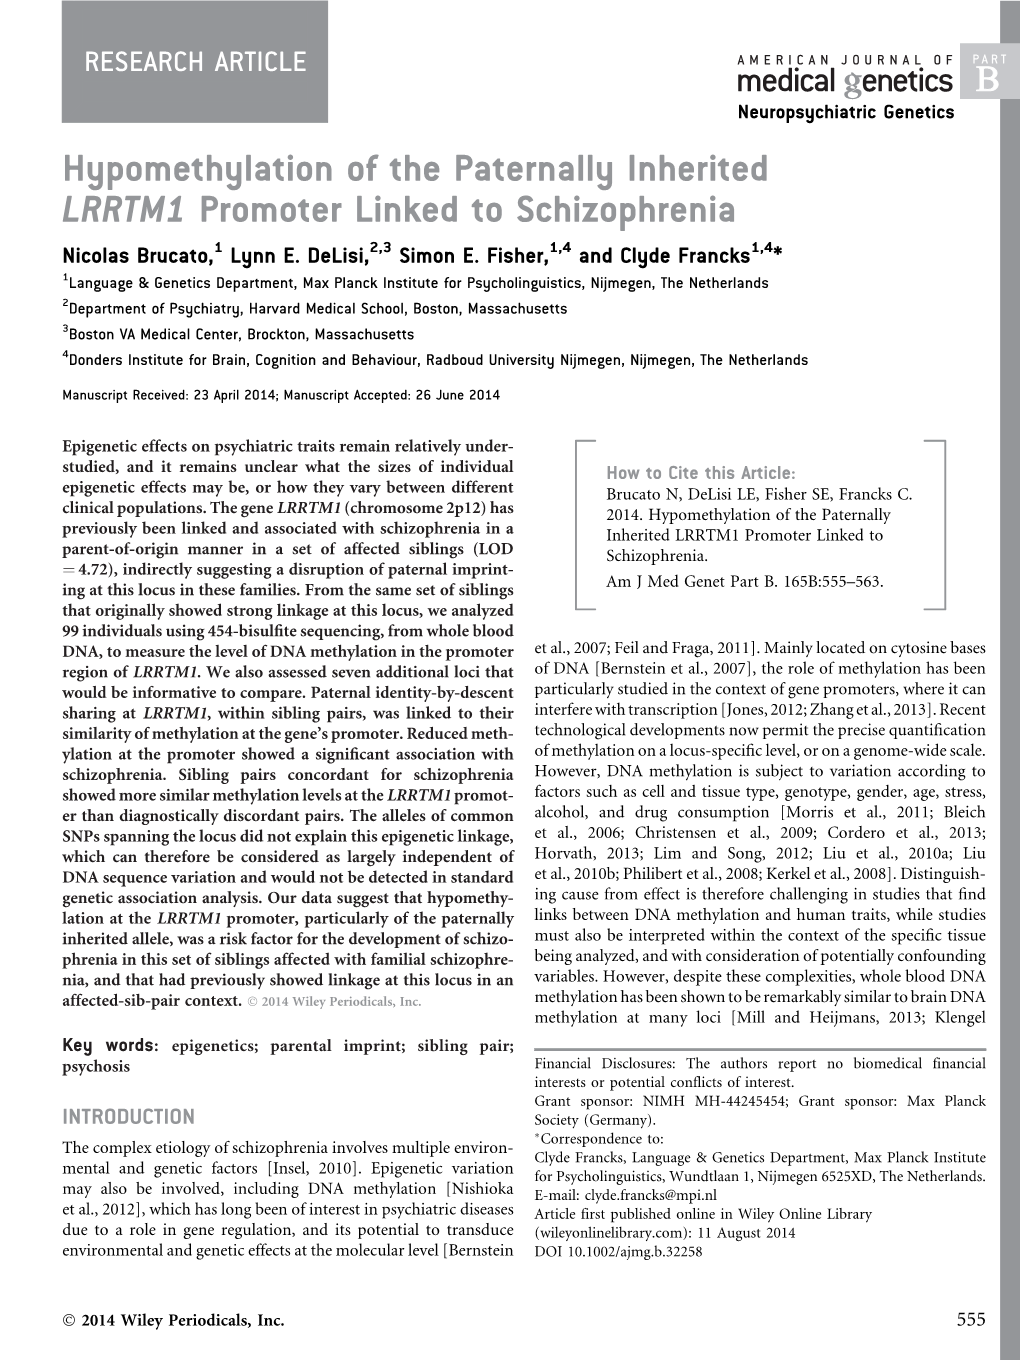 Hypomethylation of the Paternally Inherited LRRTM1 Promoter Linked to Schizophrenia Nicolas Brucato,1 Lynn E